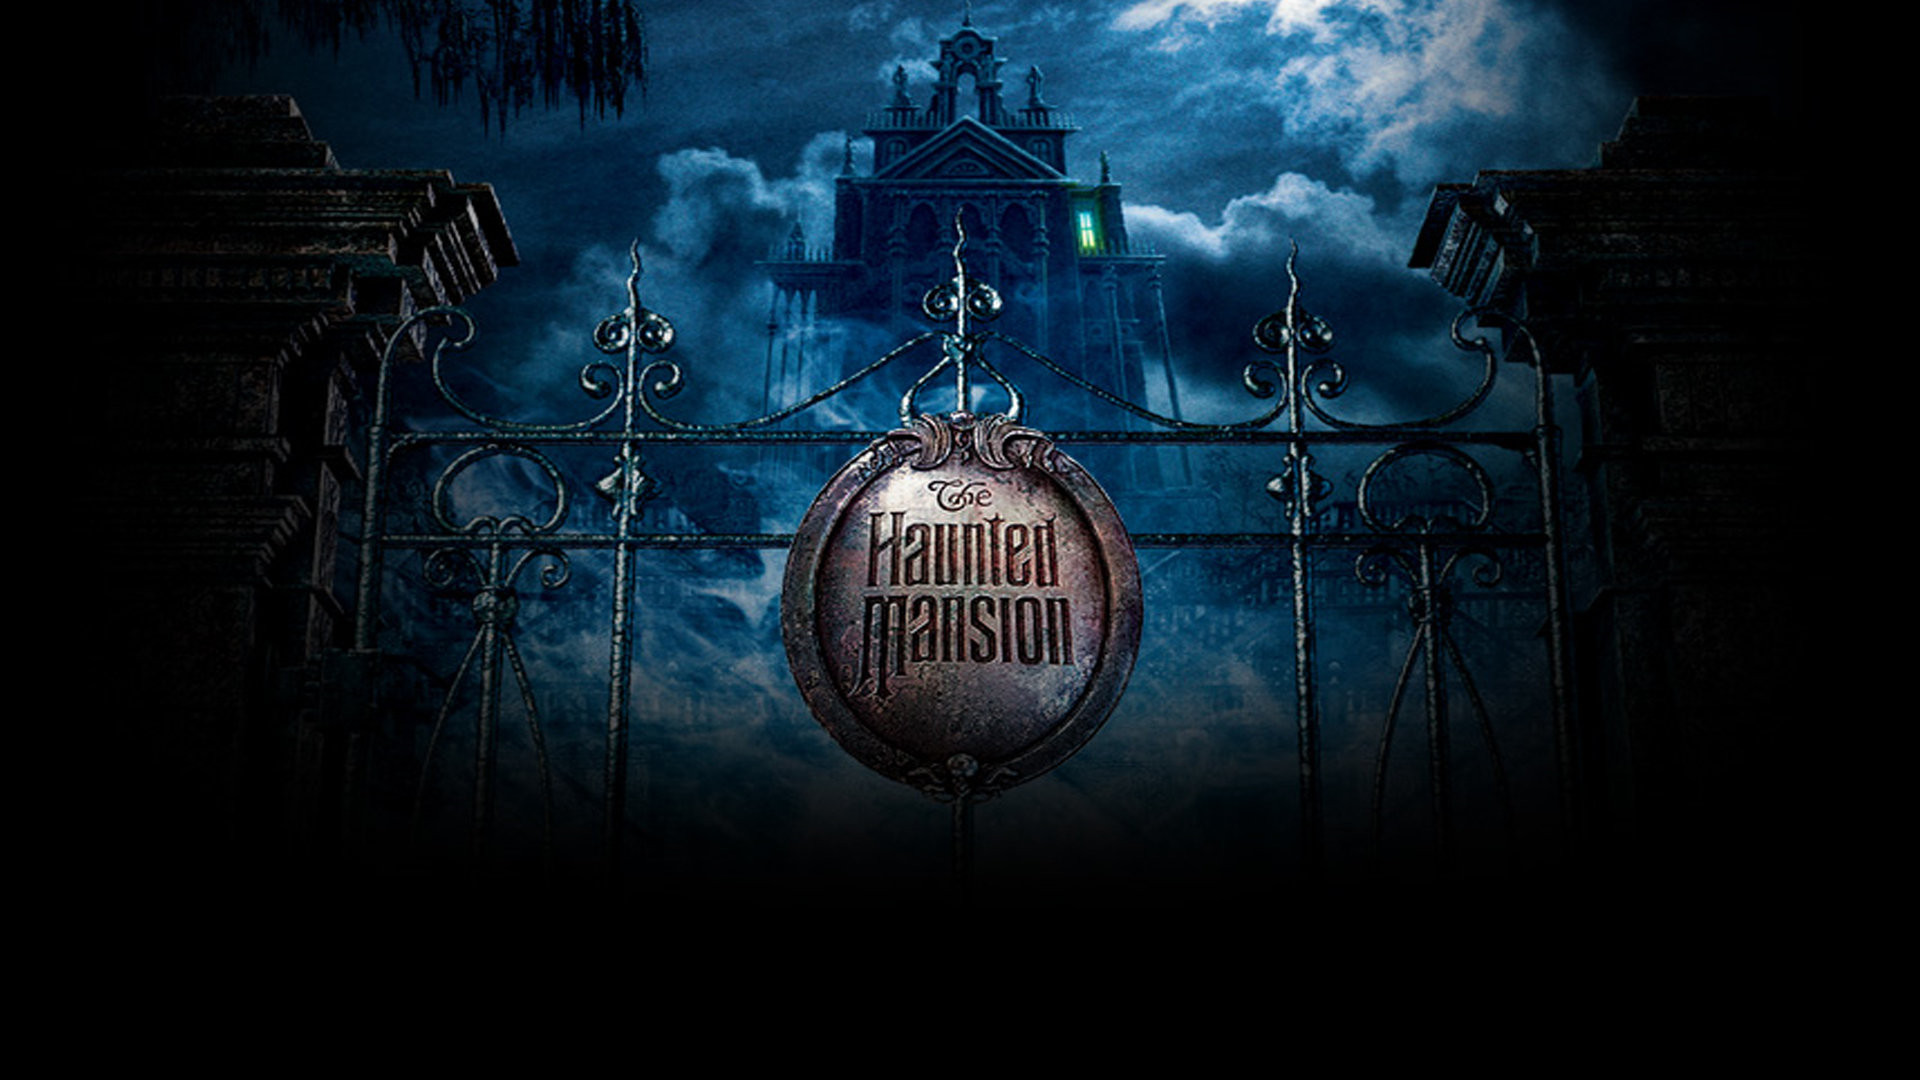 1920x1080 Will Ryan Gosling Star in Disney's “Haunted Mansion” Movie?